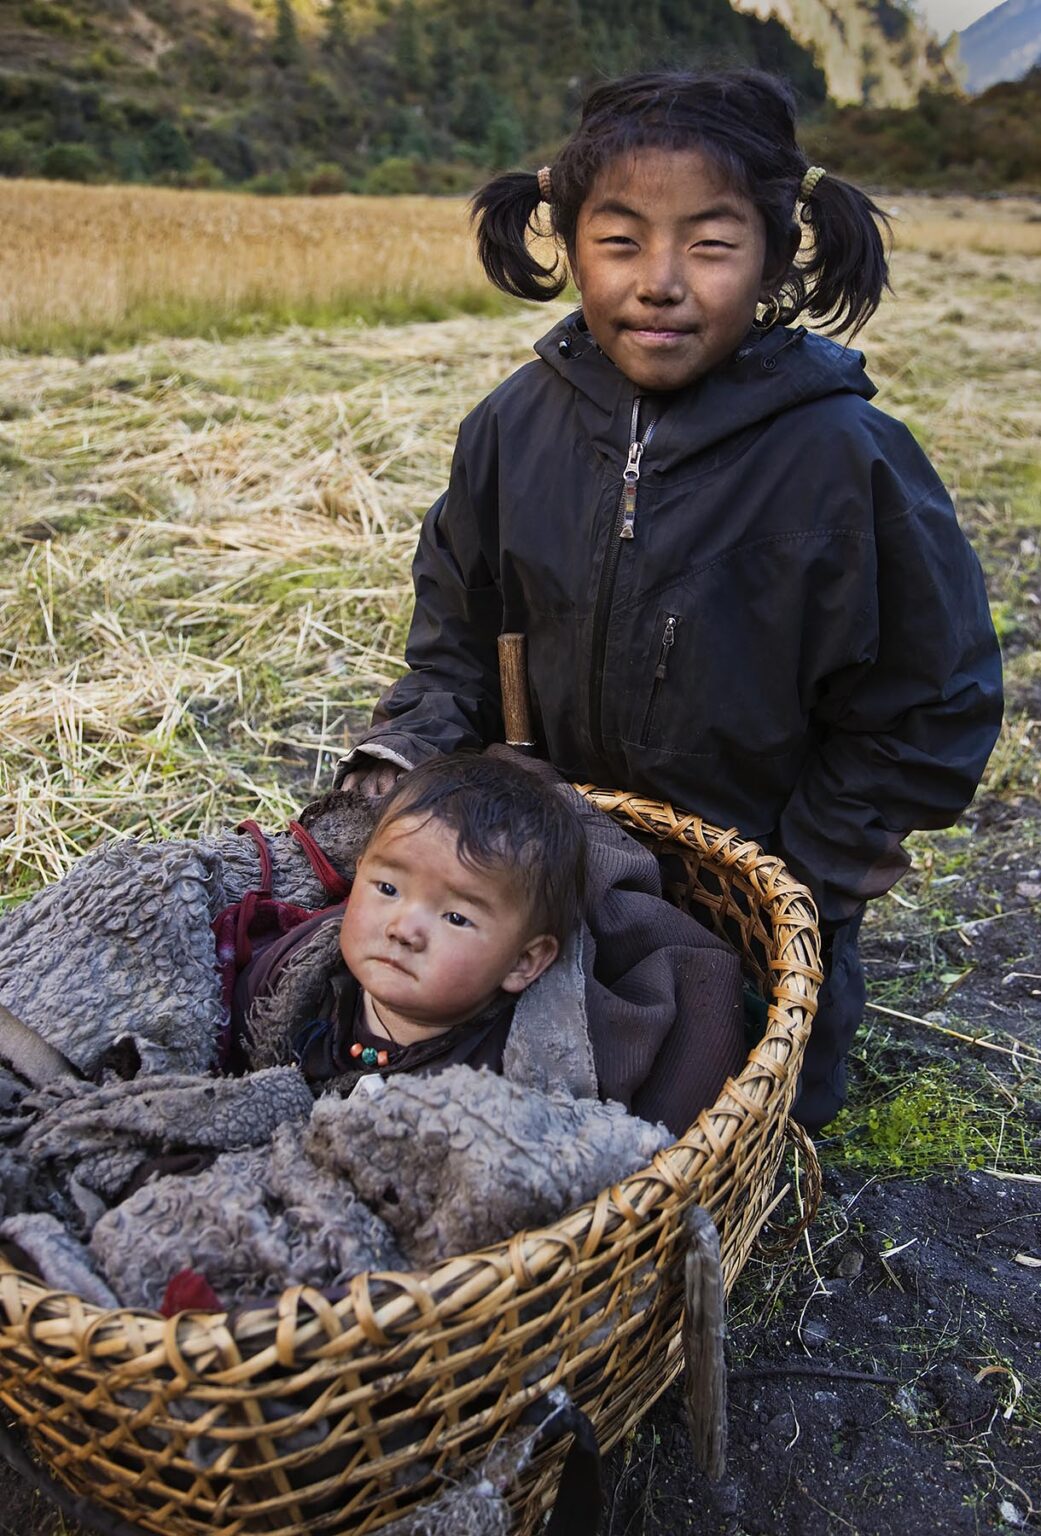 A NEPALI baby a basket with her older sister in NUPRI - AROUND MANASLU TREK, NEPAL